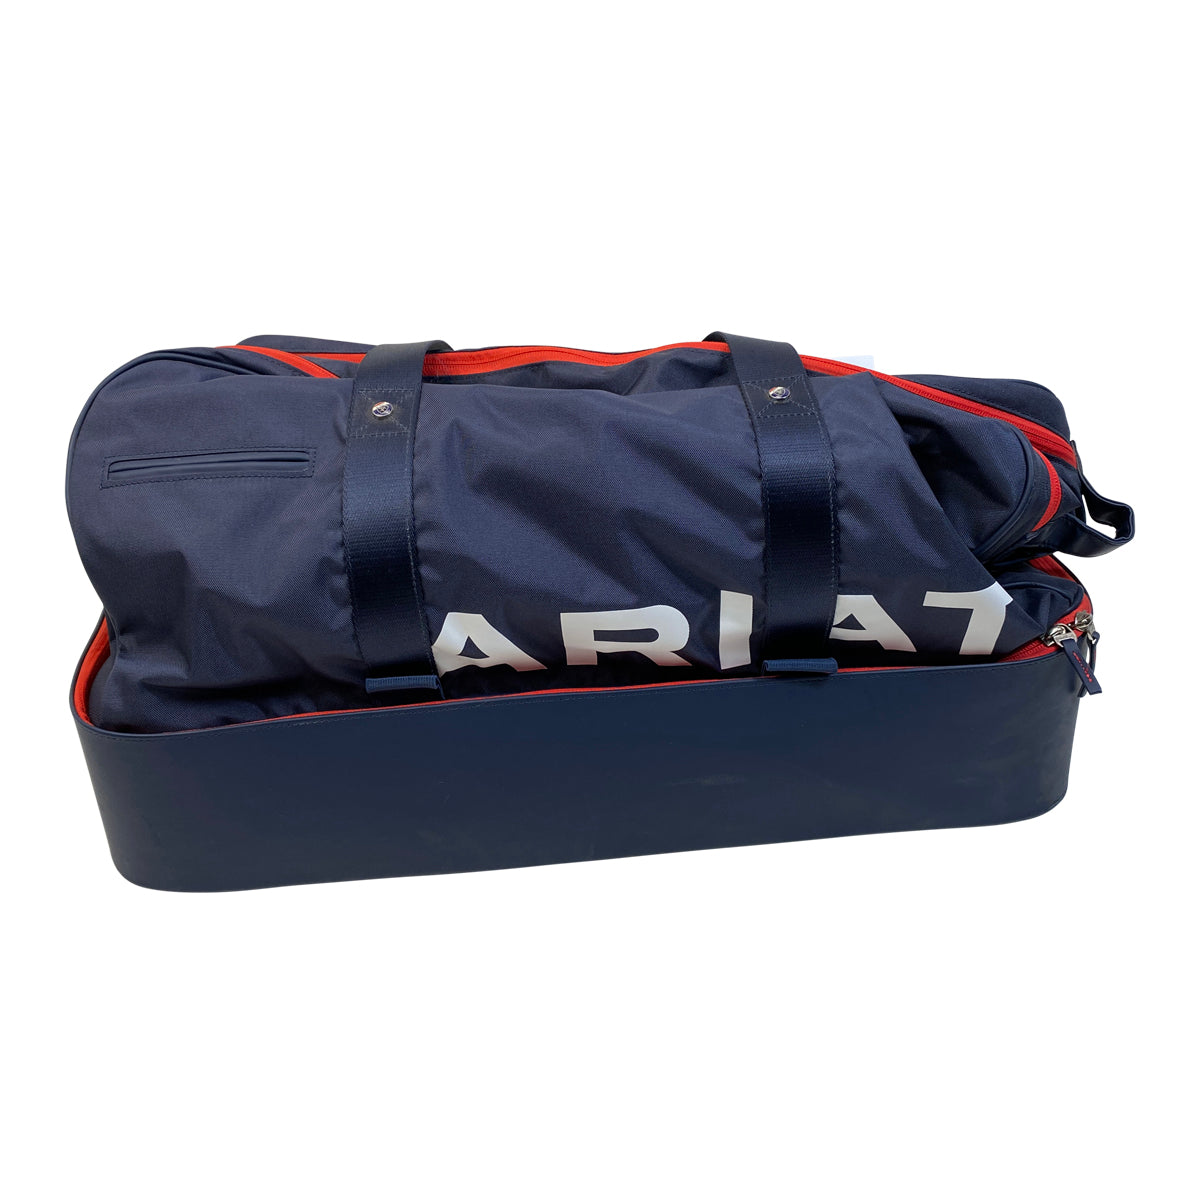 Ariat Team Duffel Grip Bag in Navy/Red